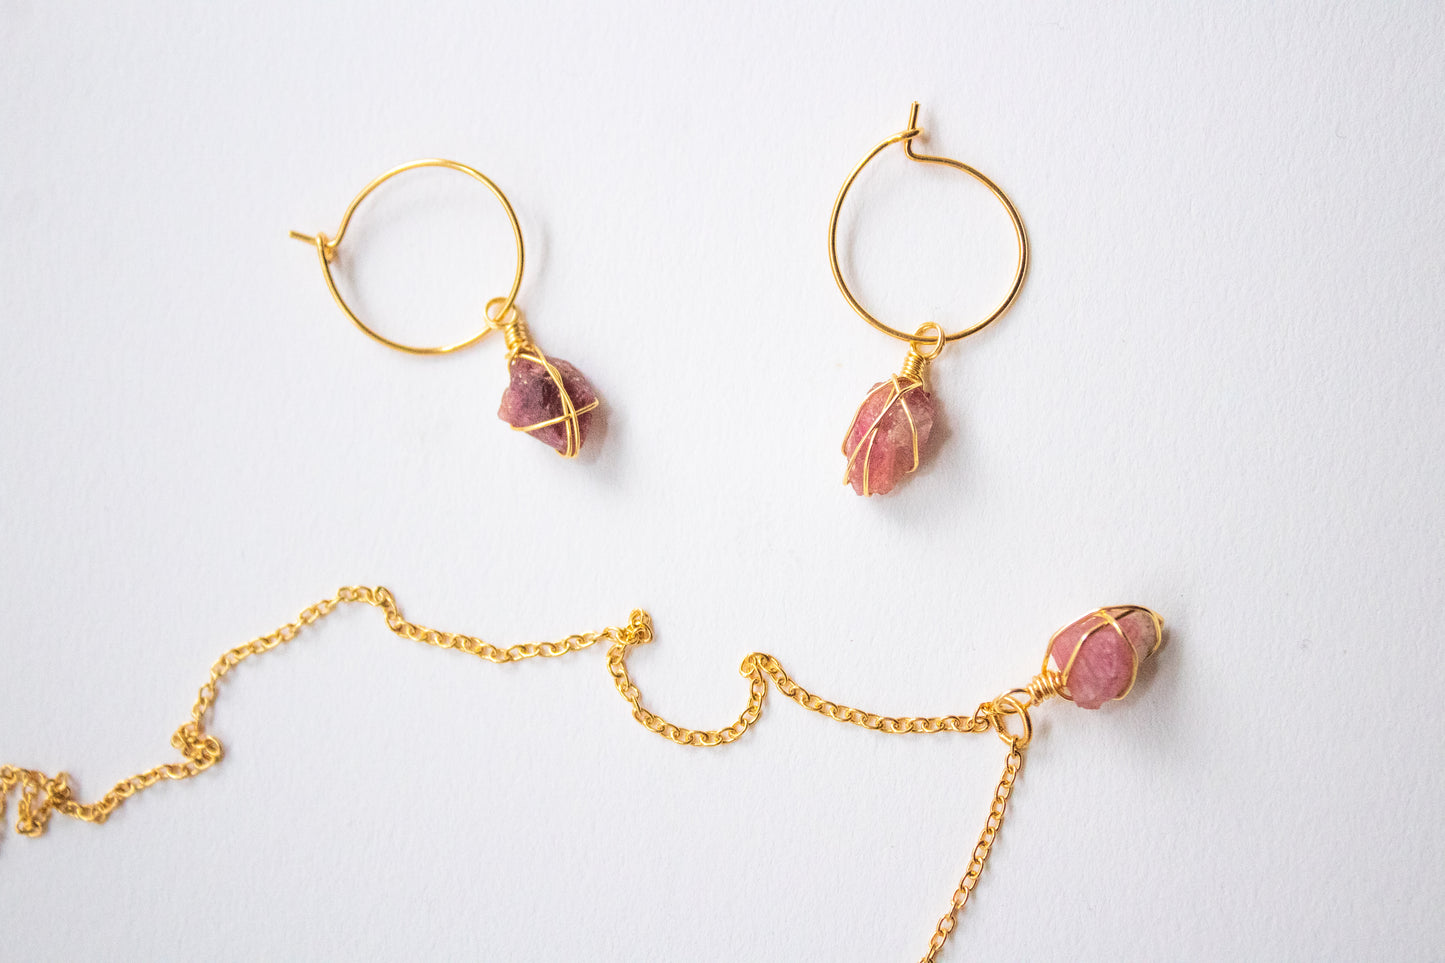 Sak. Minimalist hoop earrings with pink tourmaline